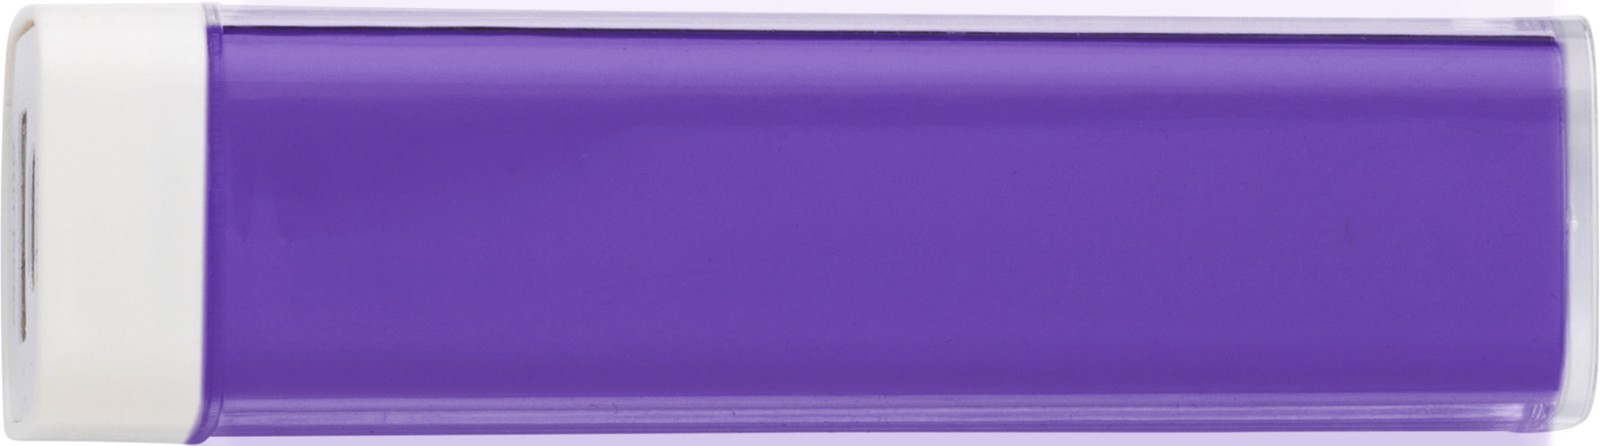 ABS power bank - Purple